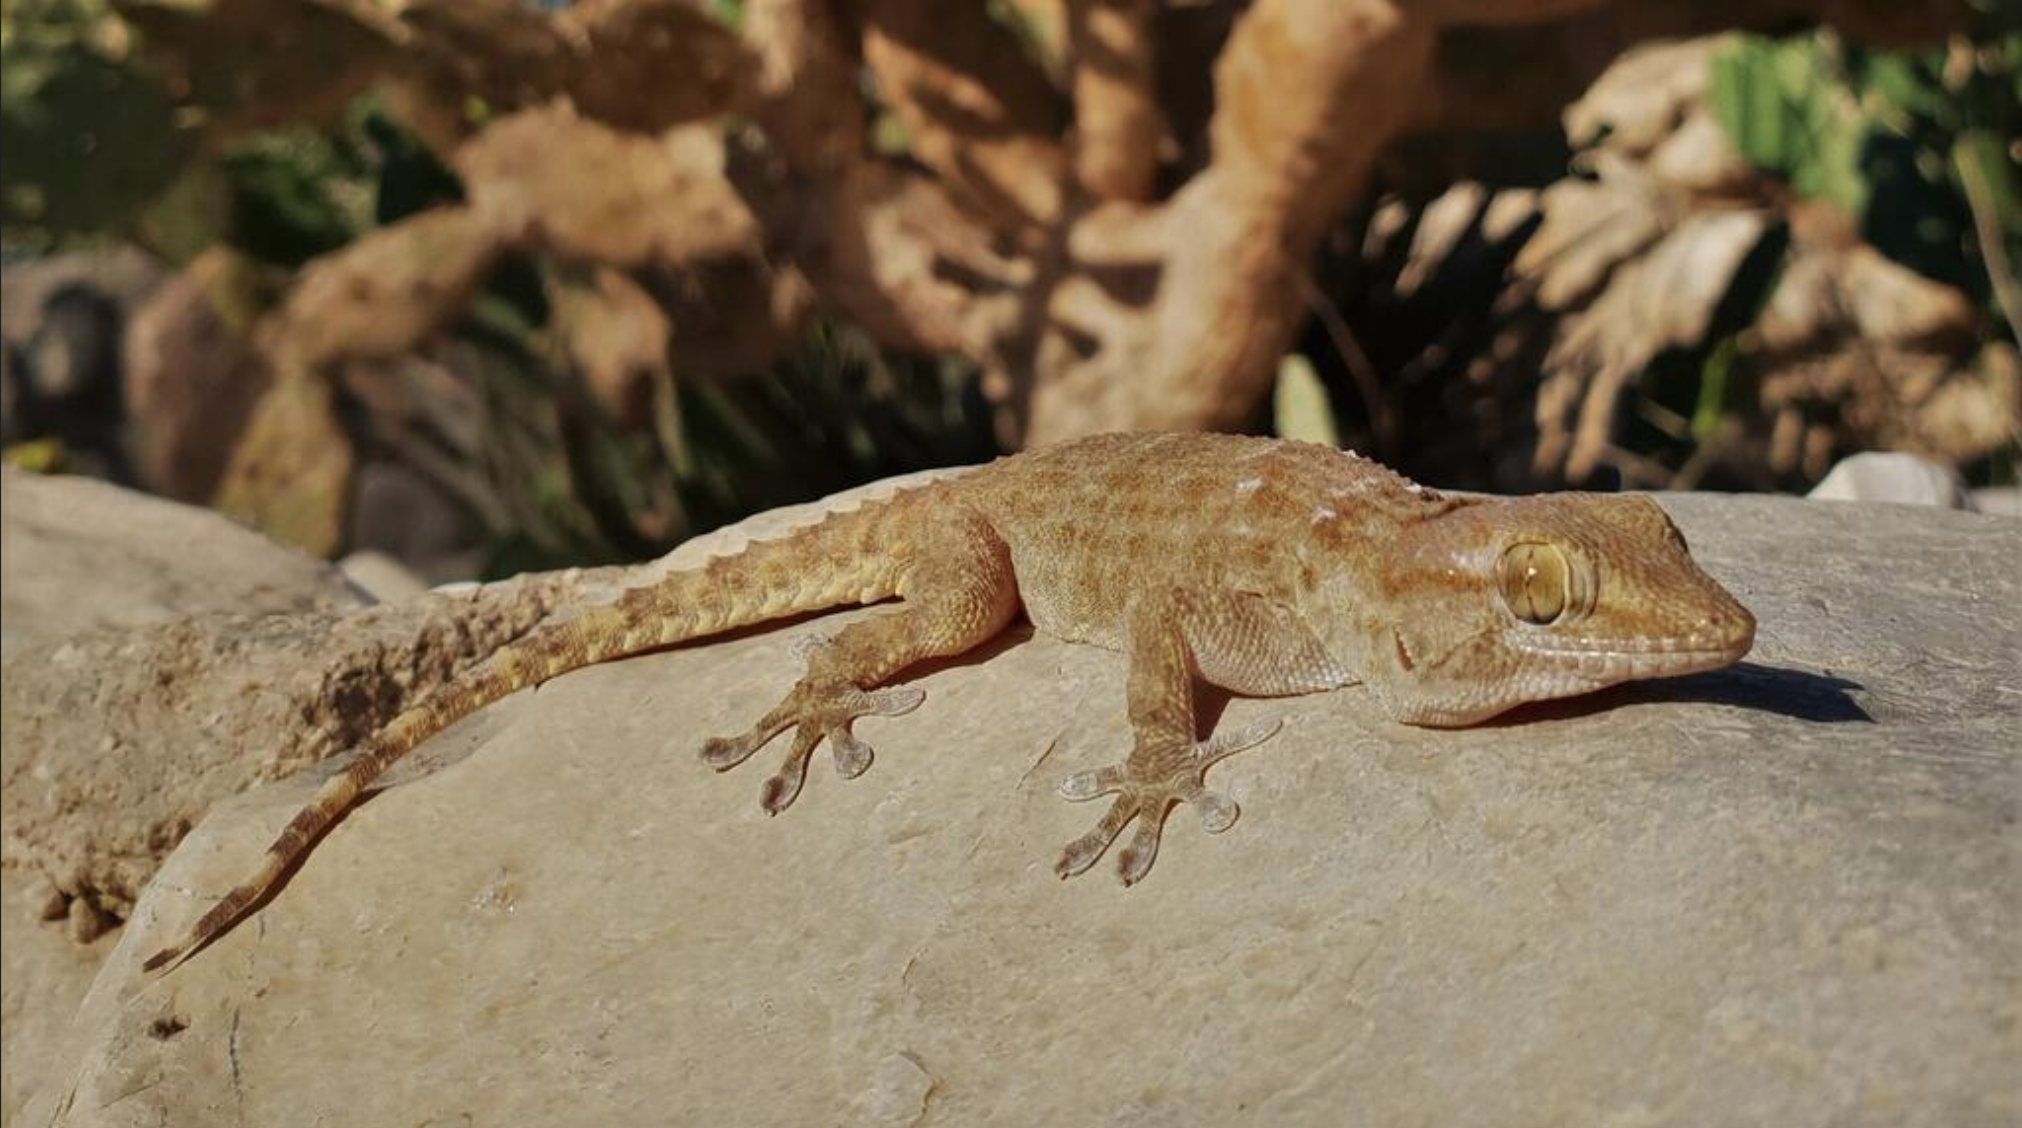 Egyptian gecko screen grab